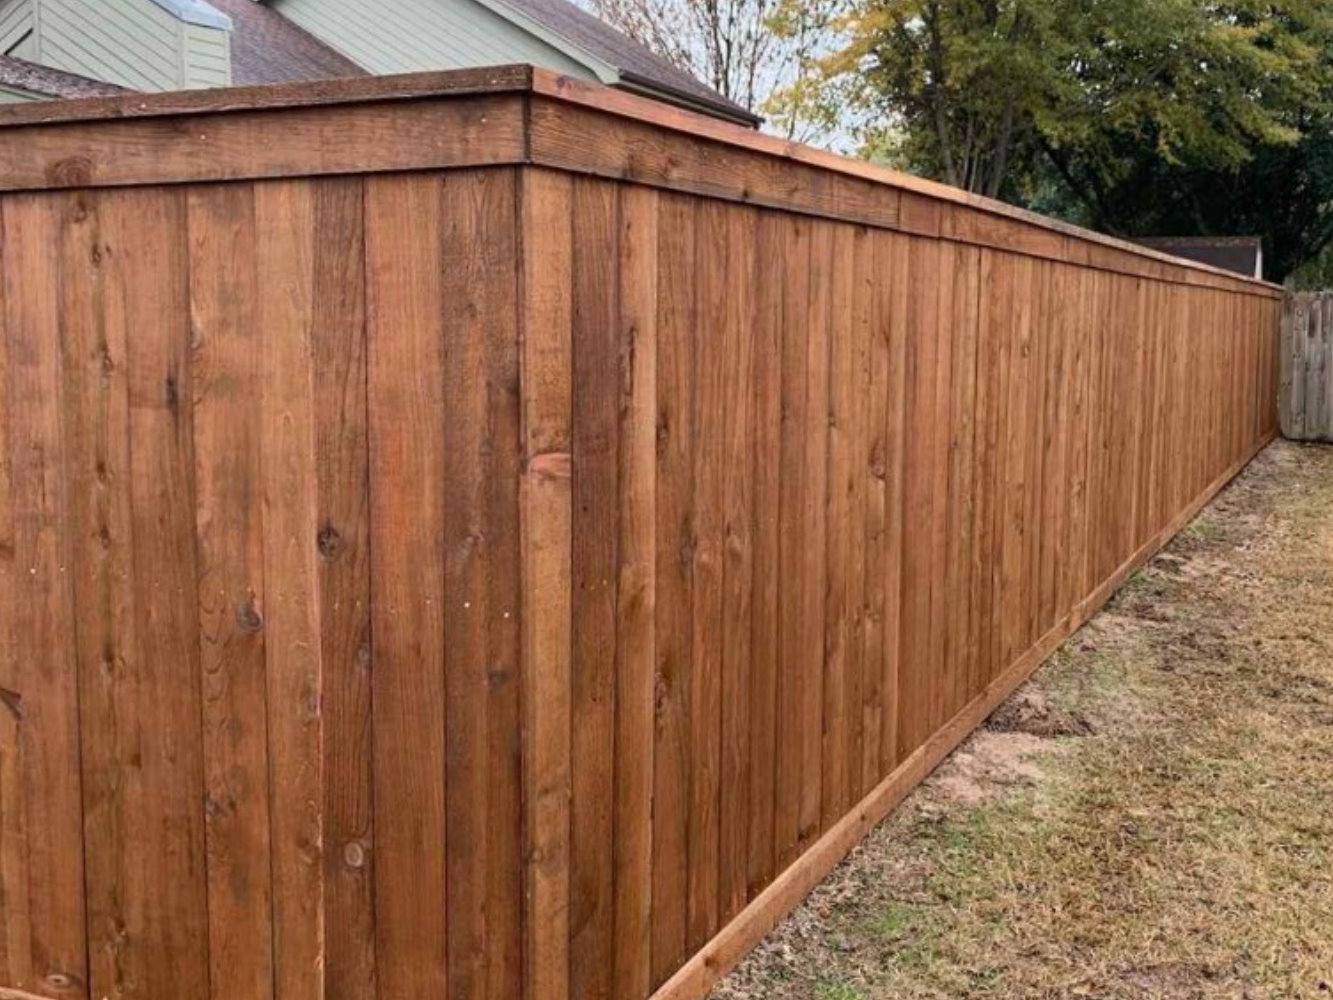 Nashville AR cap and trim style wood fence